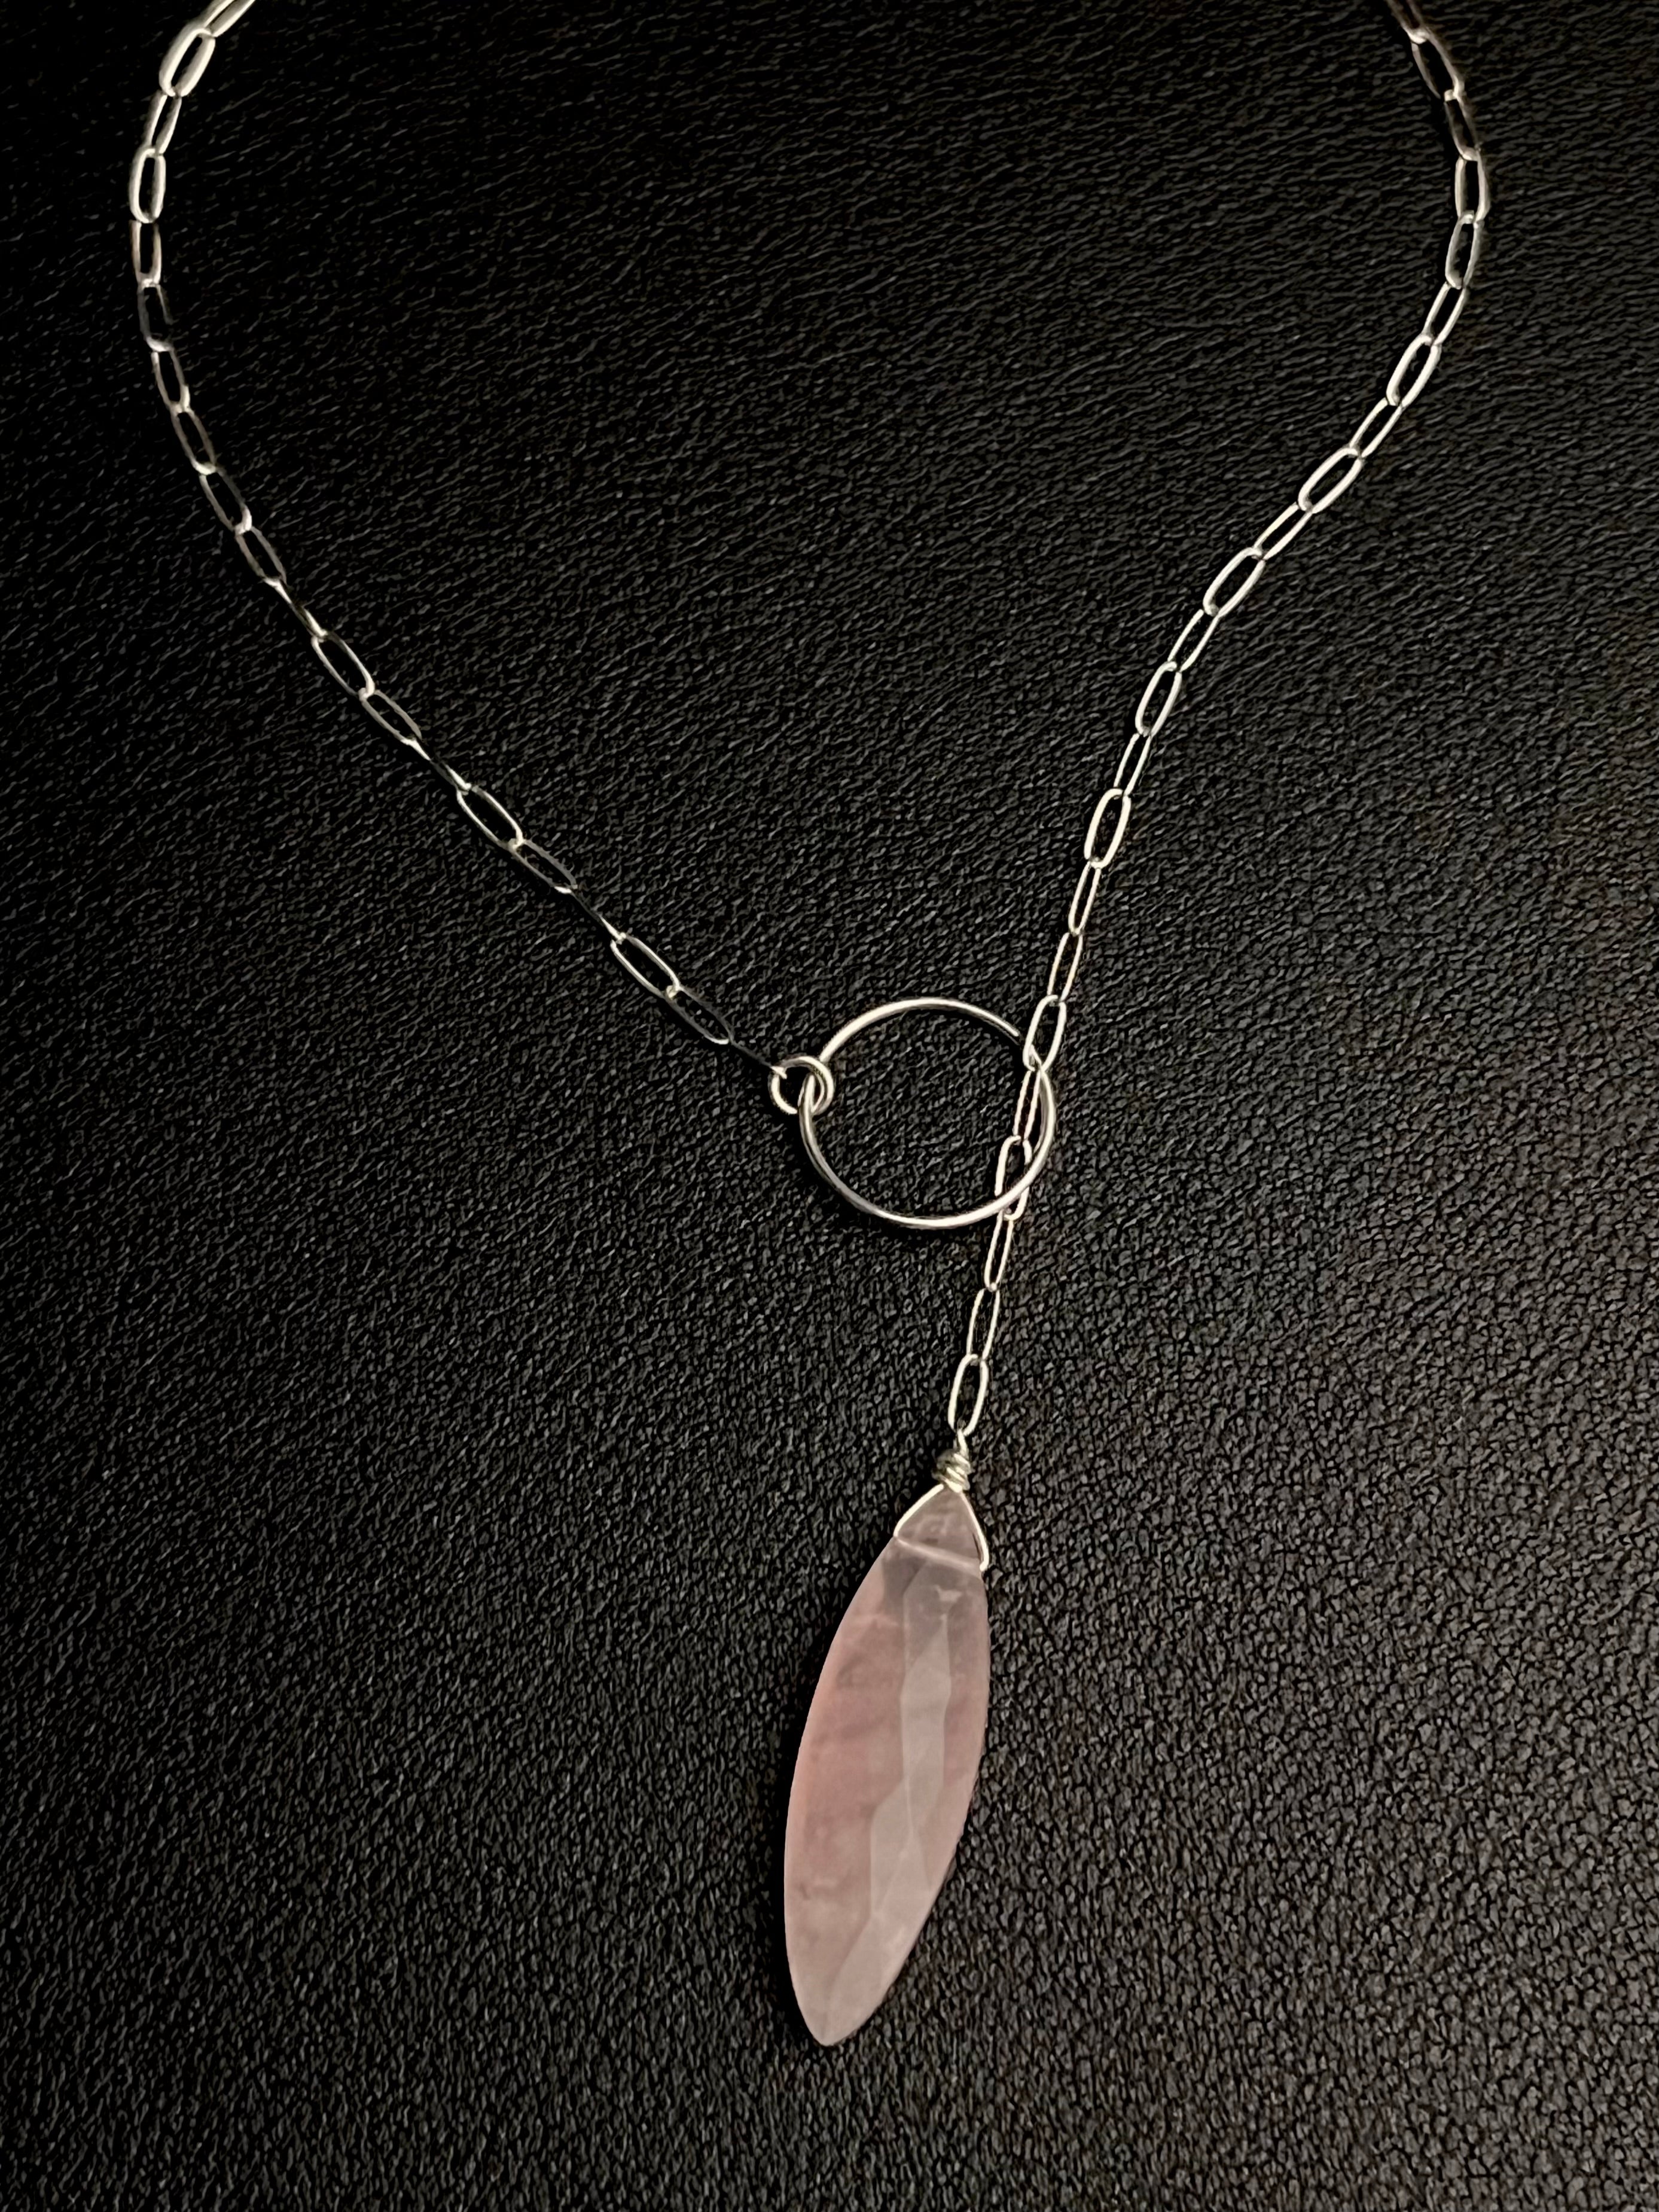 •LINKED LARIAT• rose quartz + silver necklace (19")